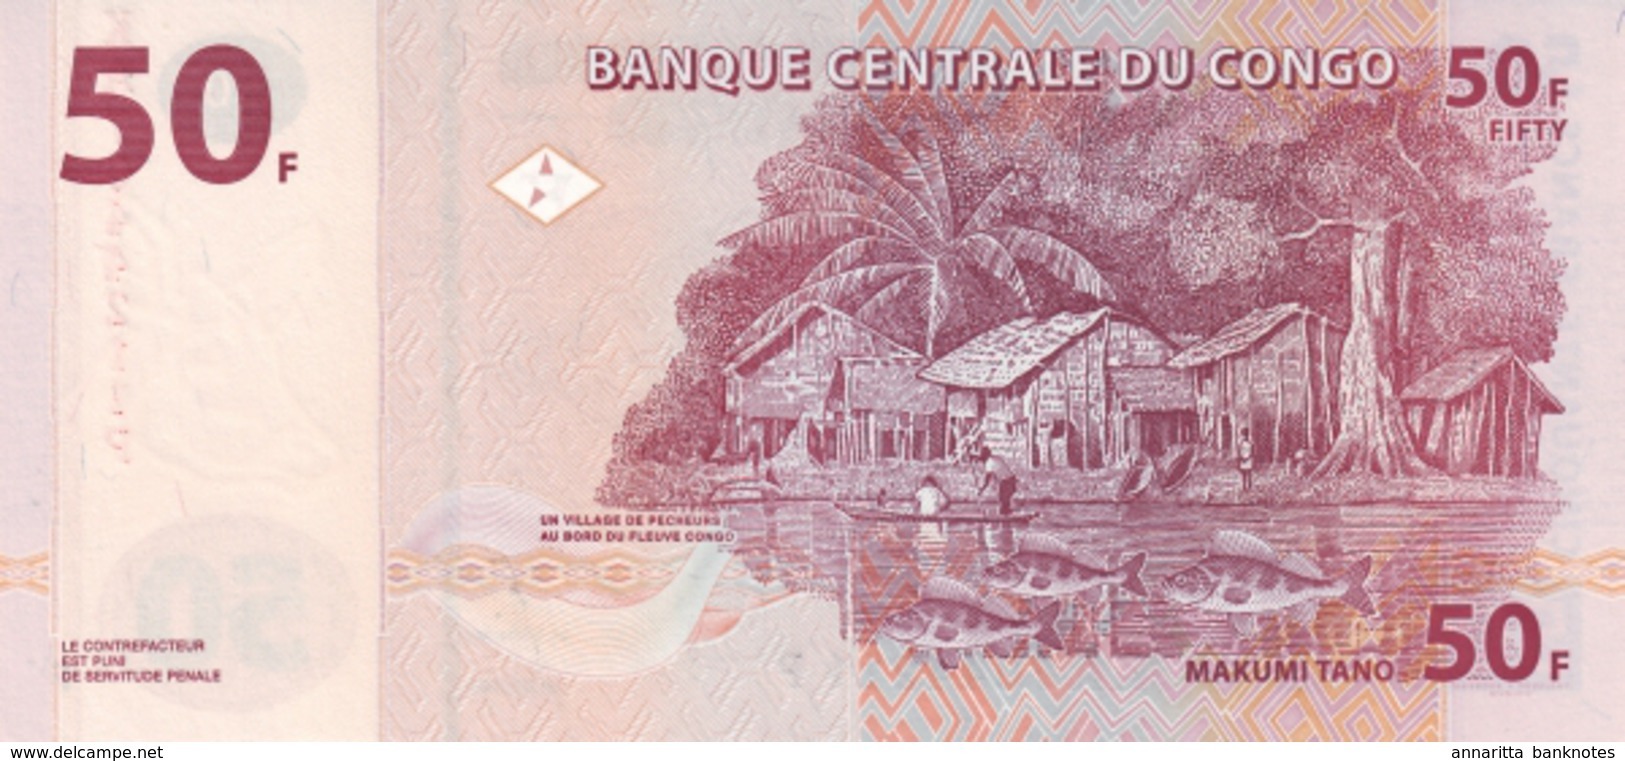 CONGO DEMOCRATIC REPUBLIC 50 FRANCS 2007 P-97 UNC PRINTER GIESECKE & DEVRIENT [ CD319a ] - Democratic Republic Of The Congo & Zaire